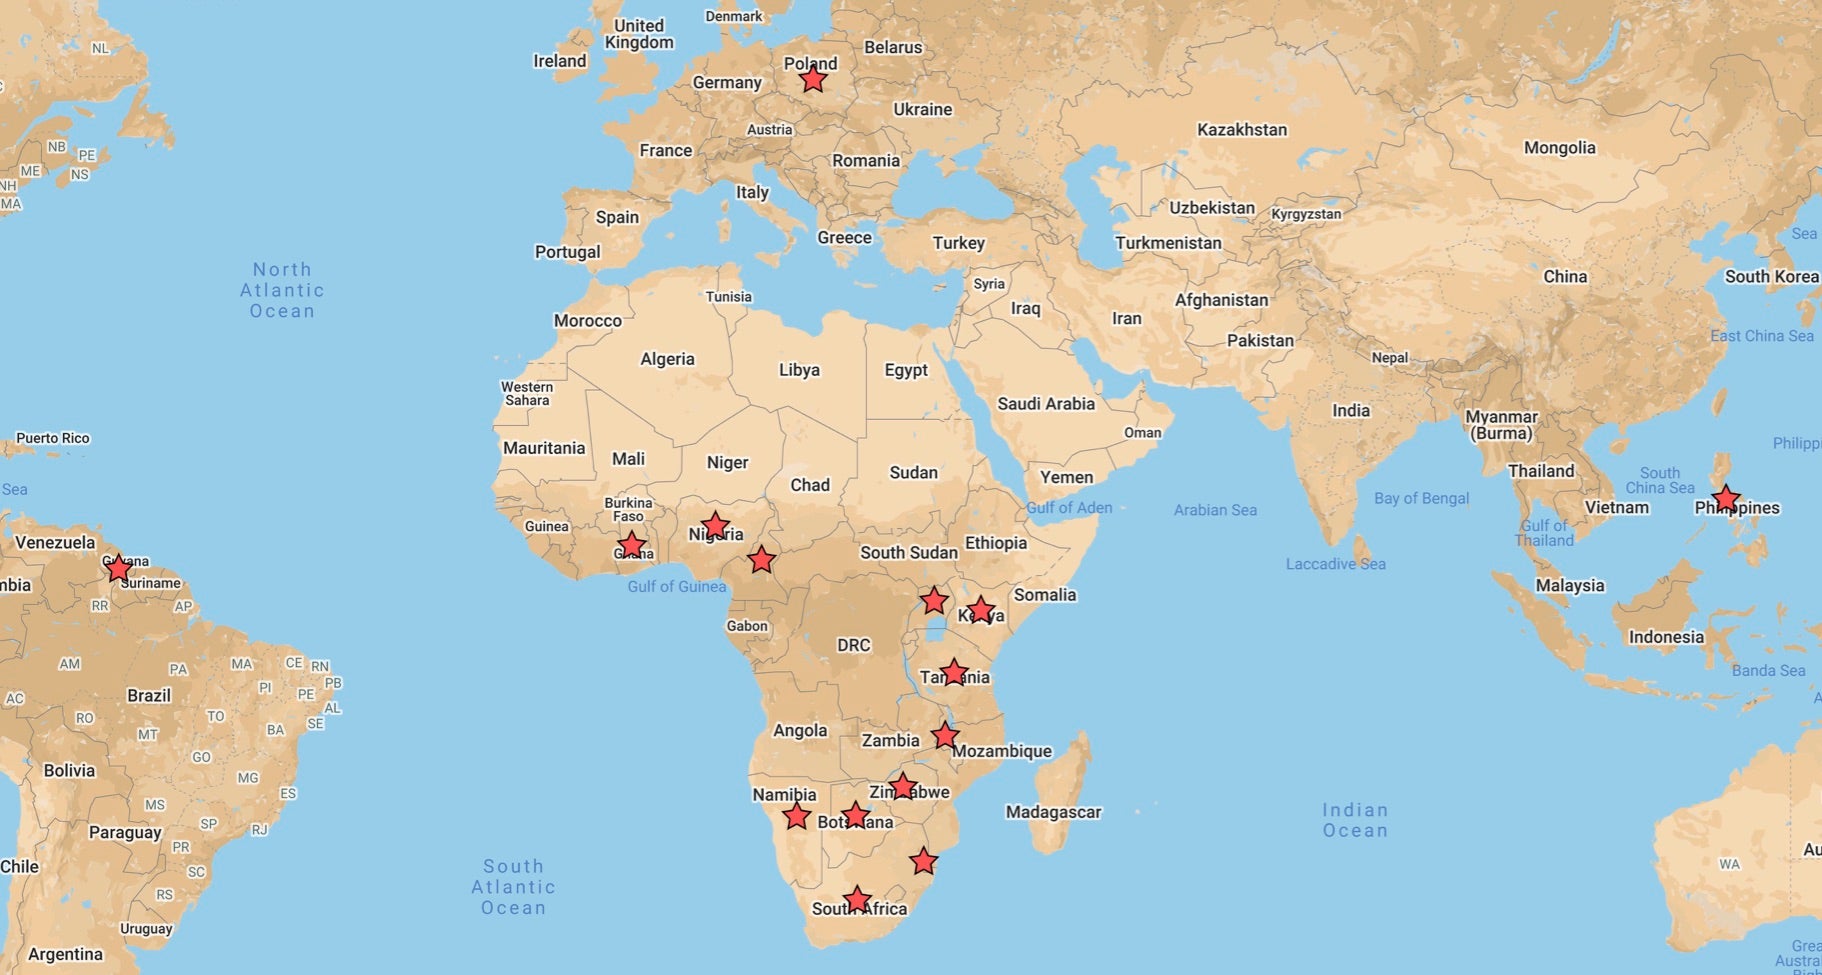 Snapshot of world map indicating countries where our Clinic students have challenged sex discriminatory laws: Botswana, Cameroon, Ghana, Guyana, Kenya, Malawi, Namibia, Nigeria, Philippines, Poland, South Africa, Swaziland, Tanzania, Uganda, and Zimbabwe.